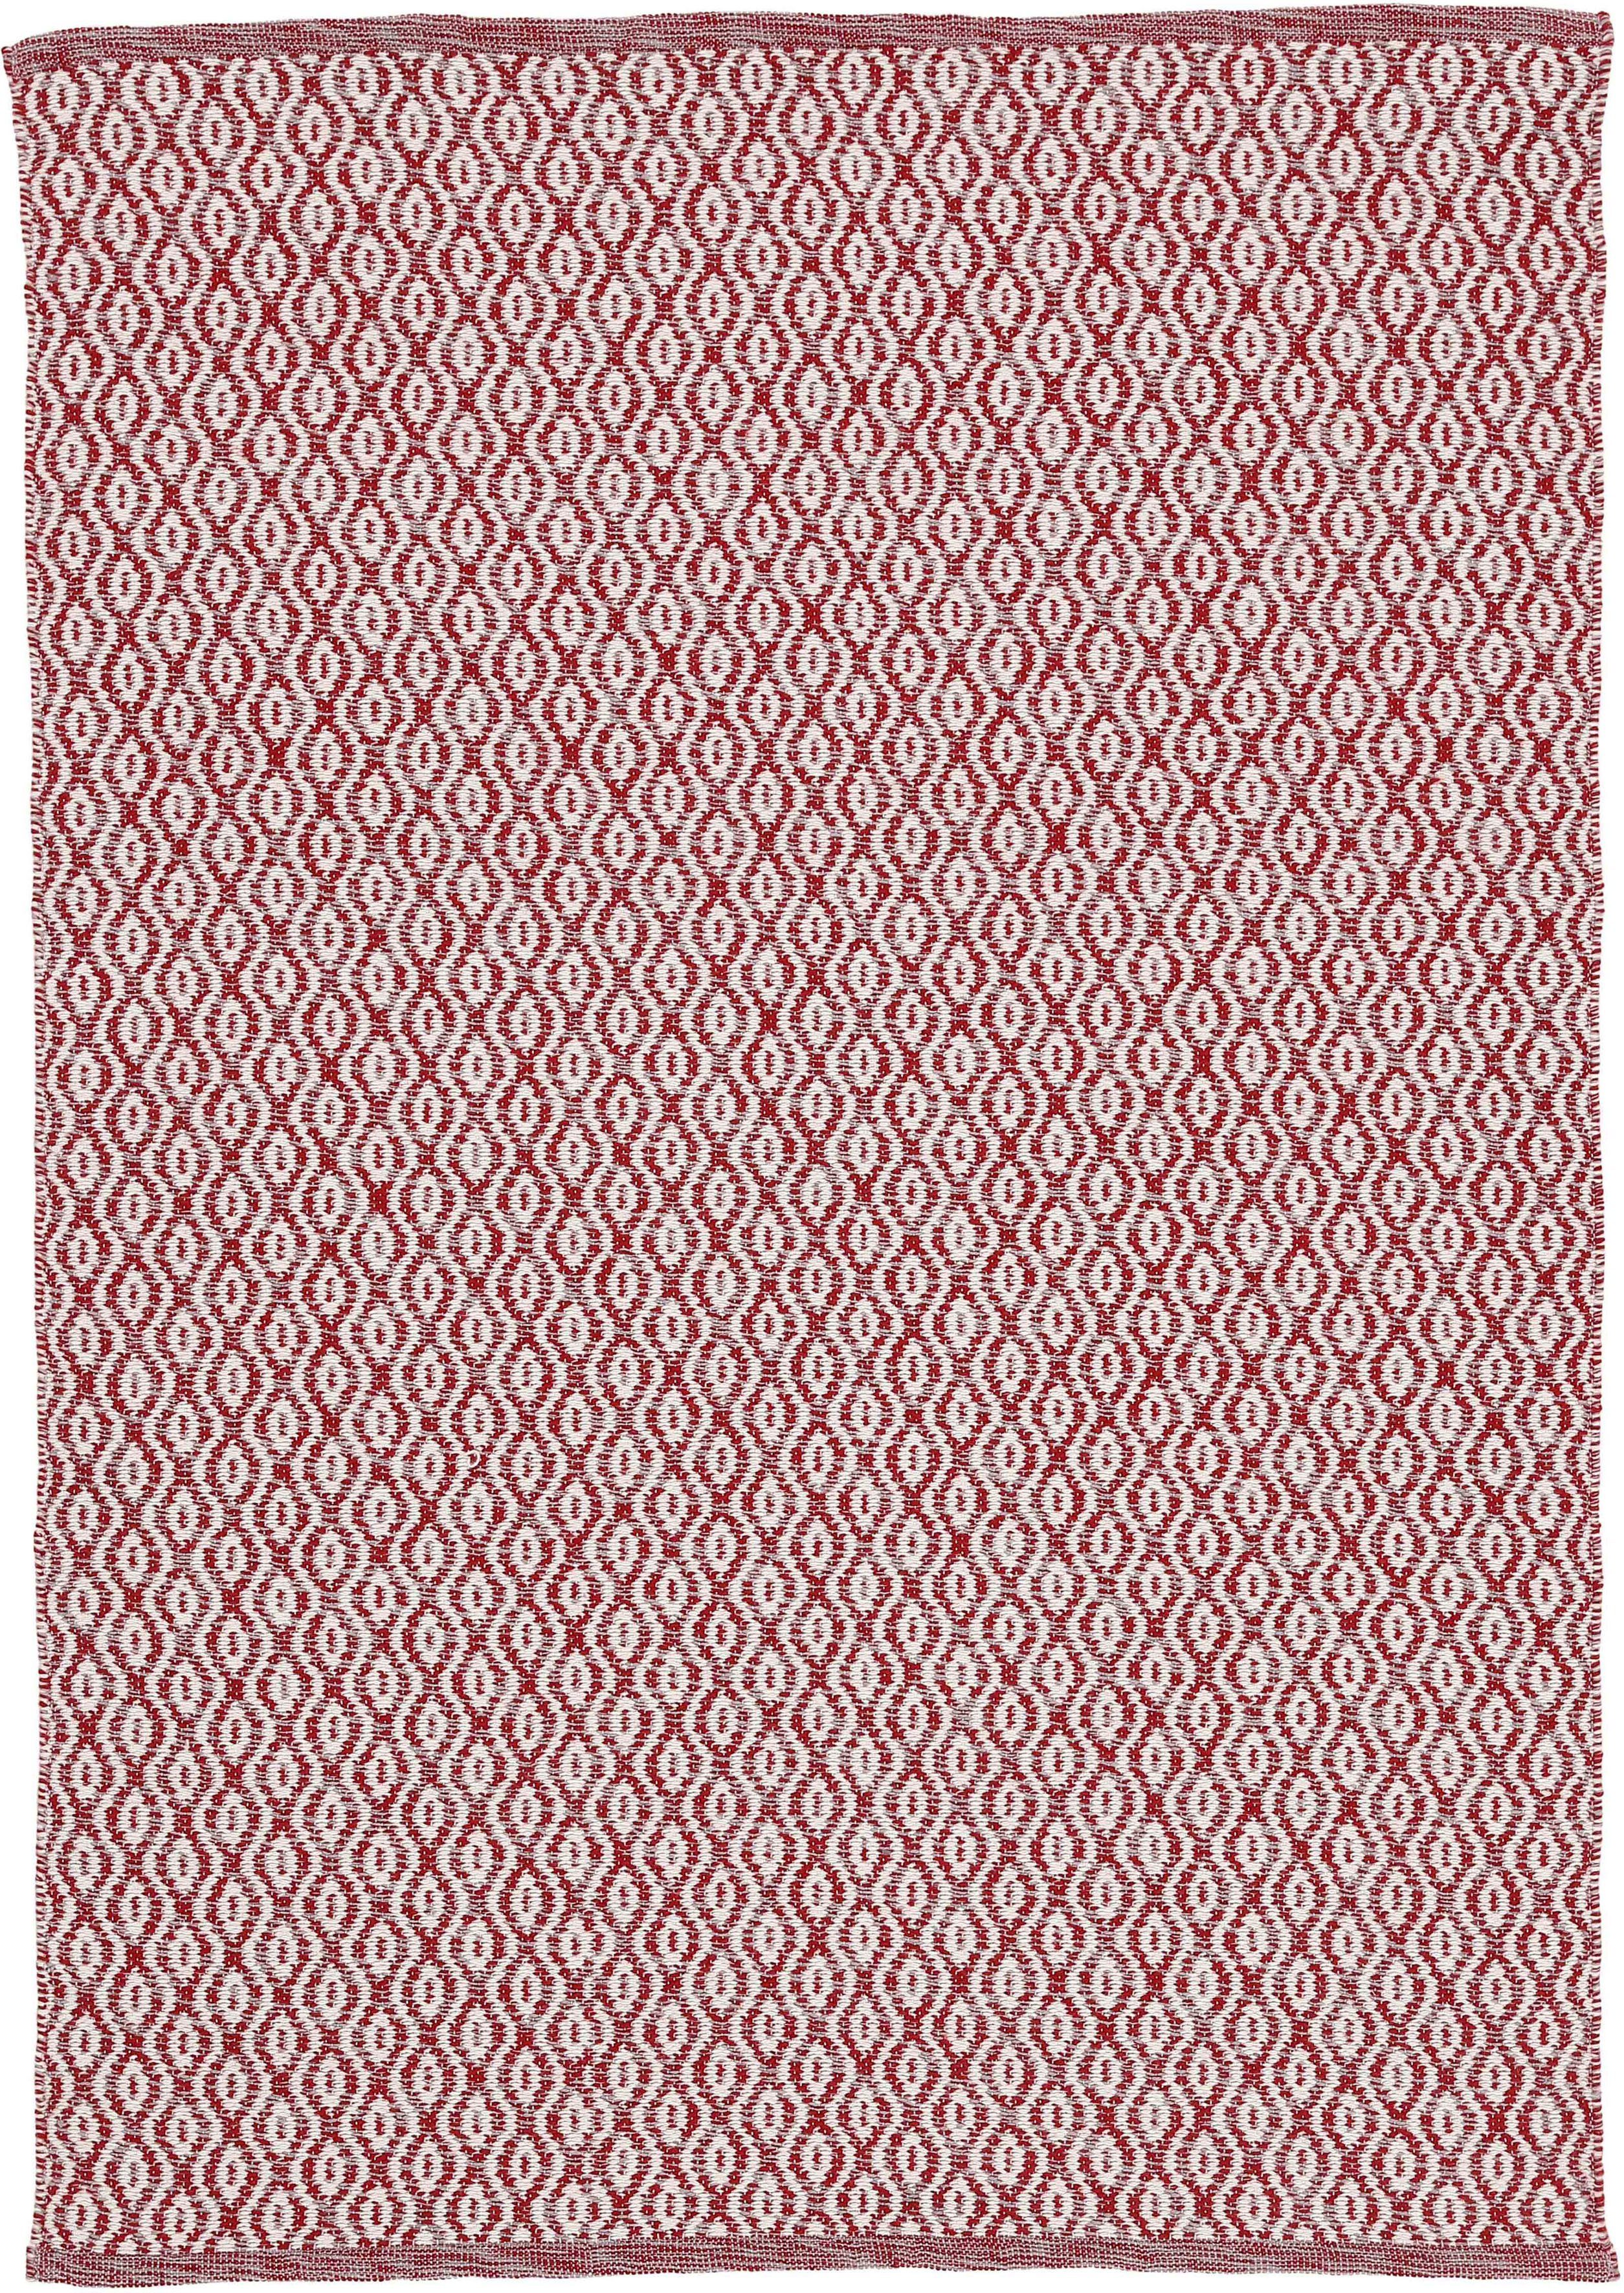 Teppich Frida 202, carpetfine, rechteckig, Höhe: 7 mm, Wendeteppich, 100% recyceltem  Material (PET), Flachgewebe, Sisal Optik | Kurzflor-Teppiche